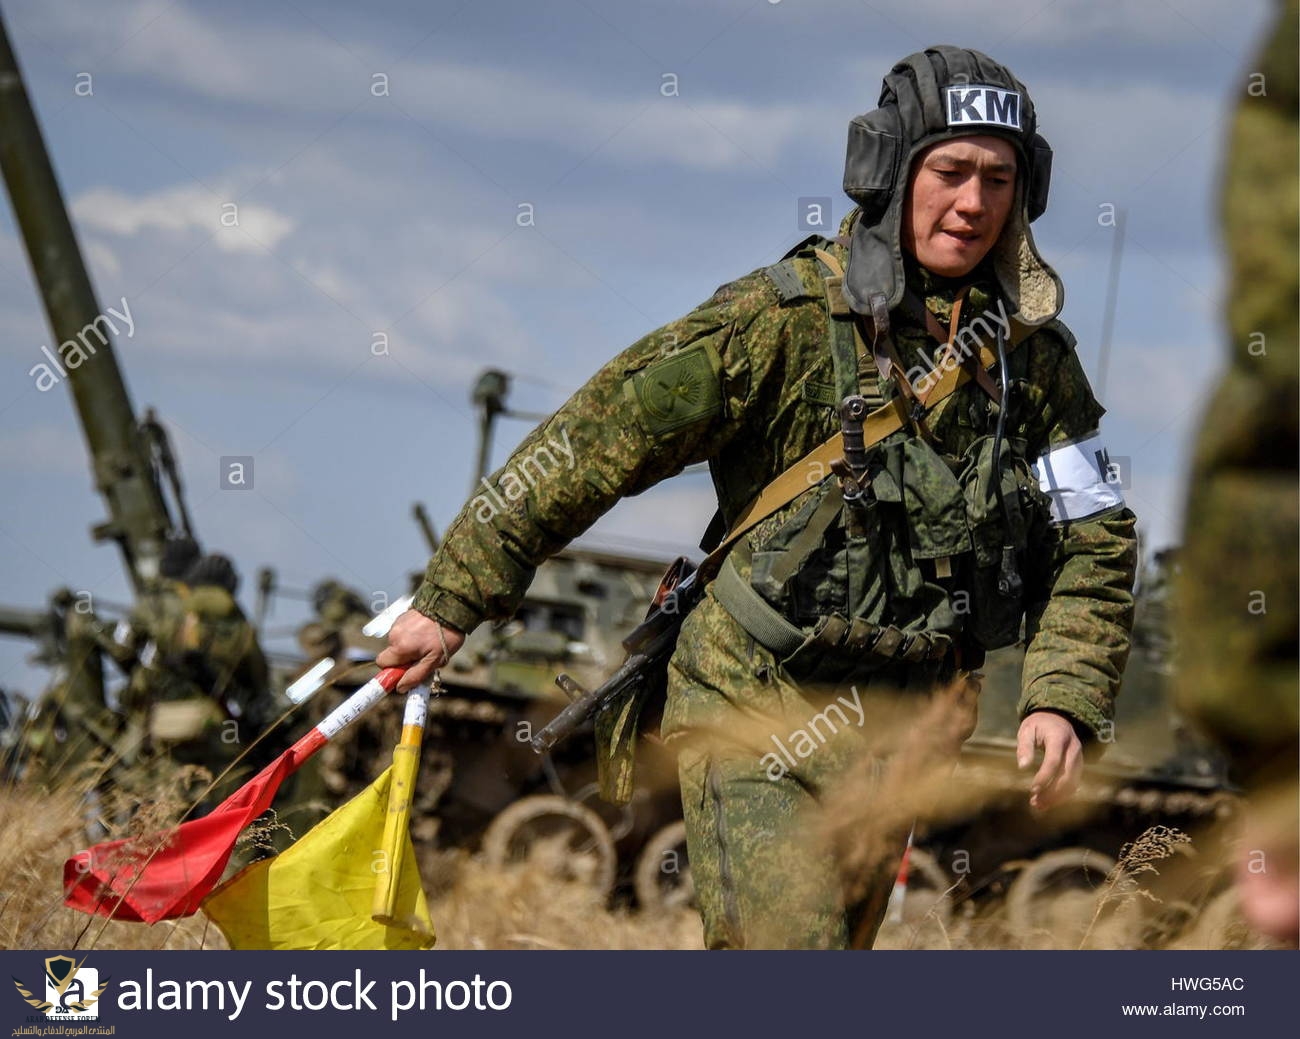 primorye-territory-russia-21st-mar-2017-a-serviceman-seen-by-a-2s4-HWG5AC.jpg